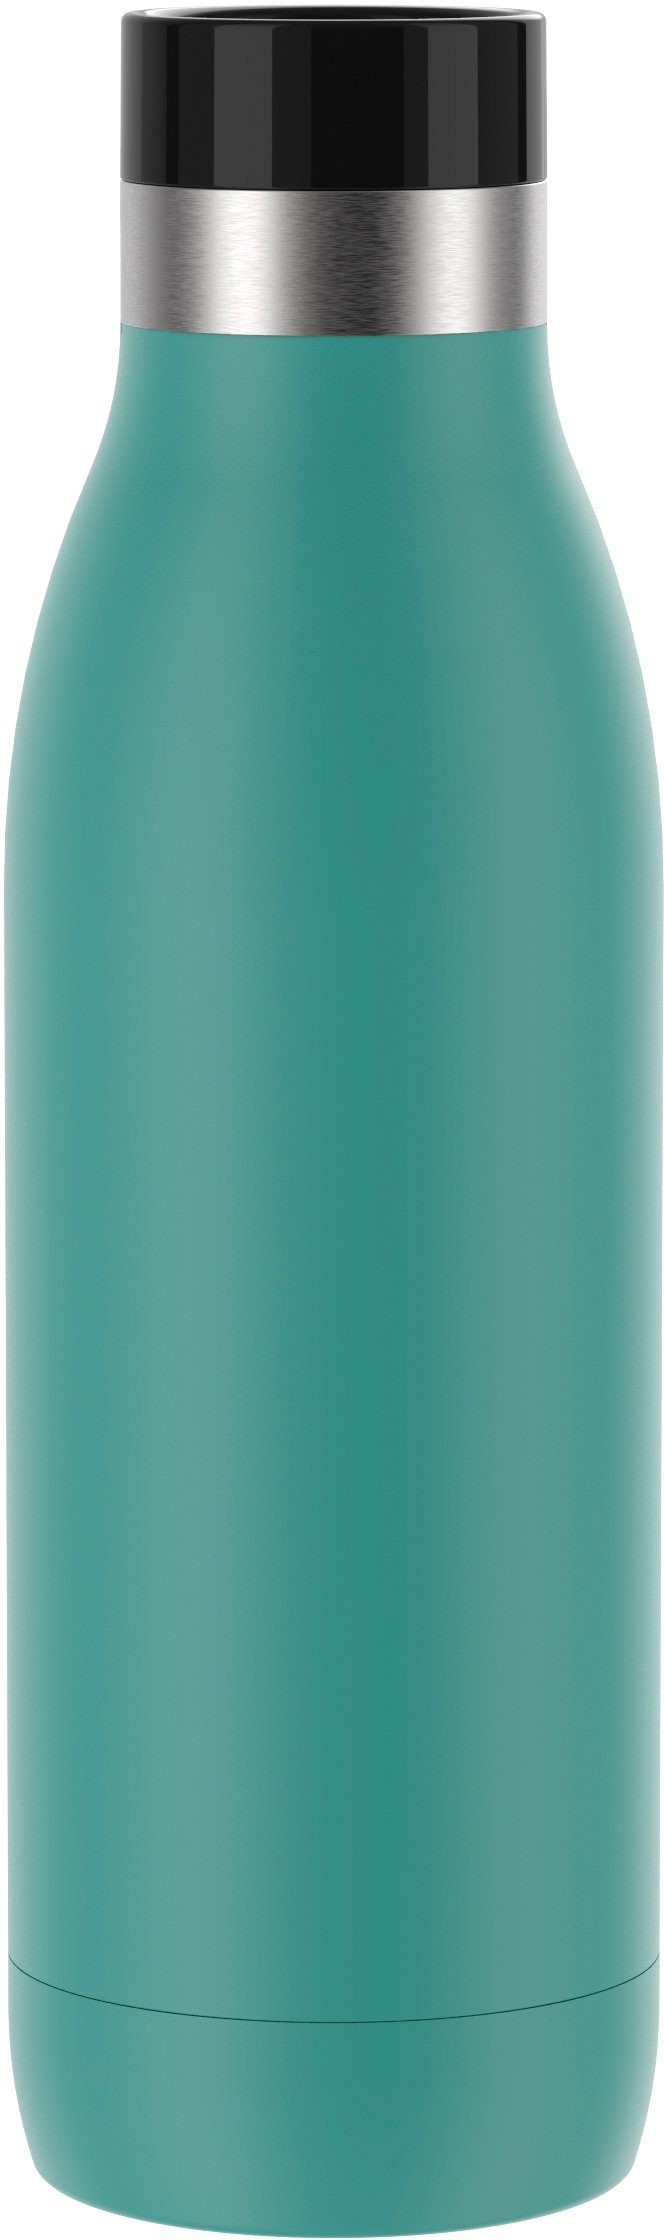 Bludrop warm/24h 12h Trinkflasche Color, kühl, petrol Deckel, Emsa Quick-Press Edelstahl, spülmaschinenfest